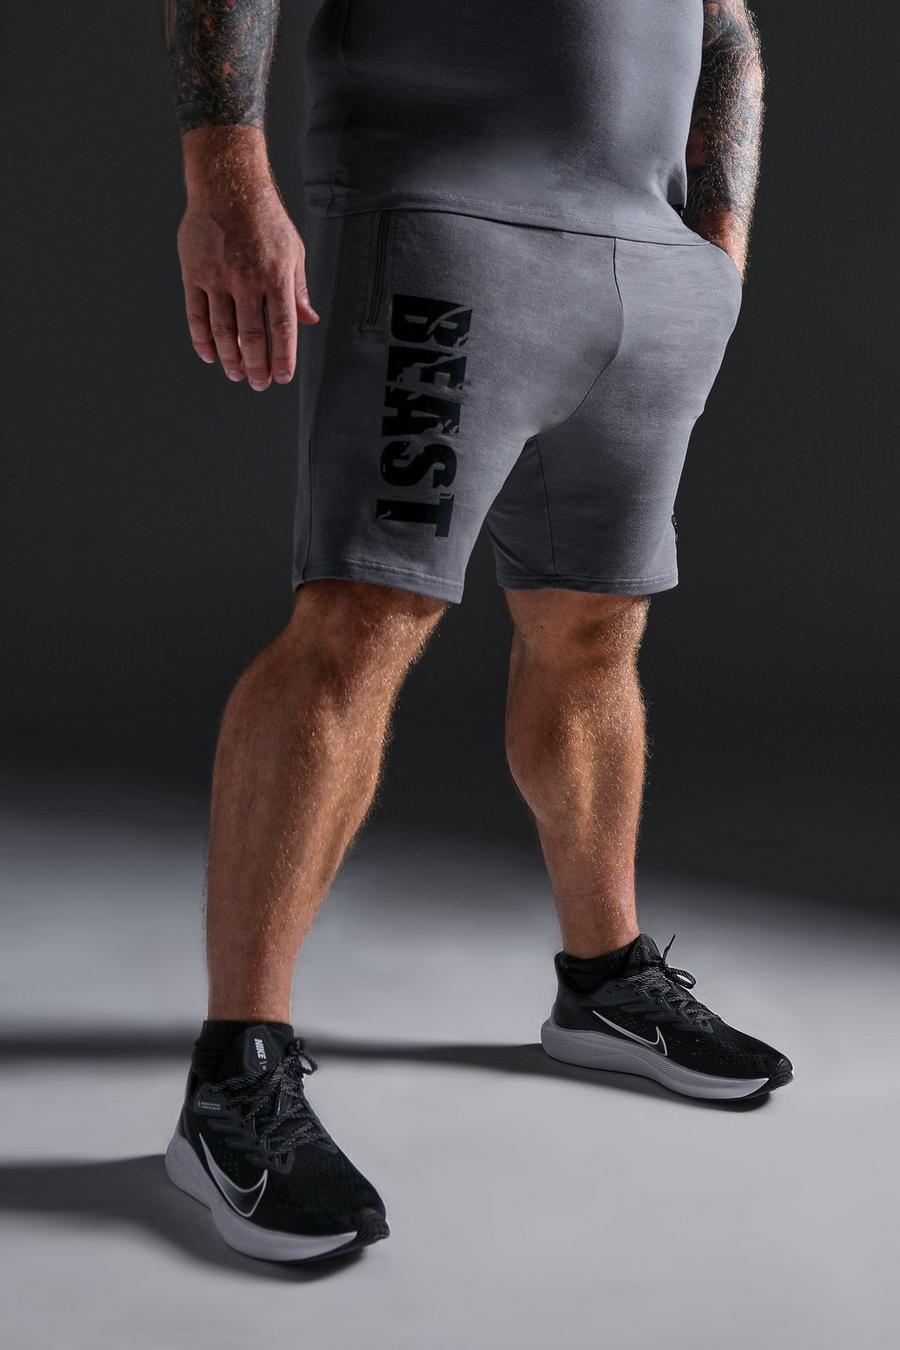 Pantalón corto deportivo MAN Active x Beast - Eddie Hall, Charcoal gris